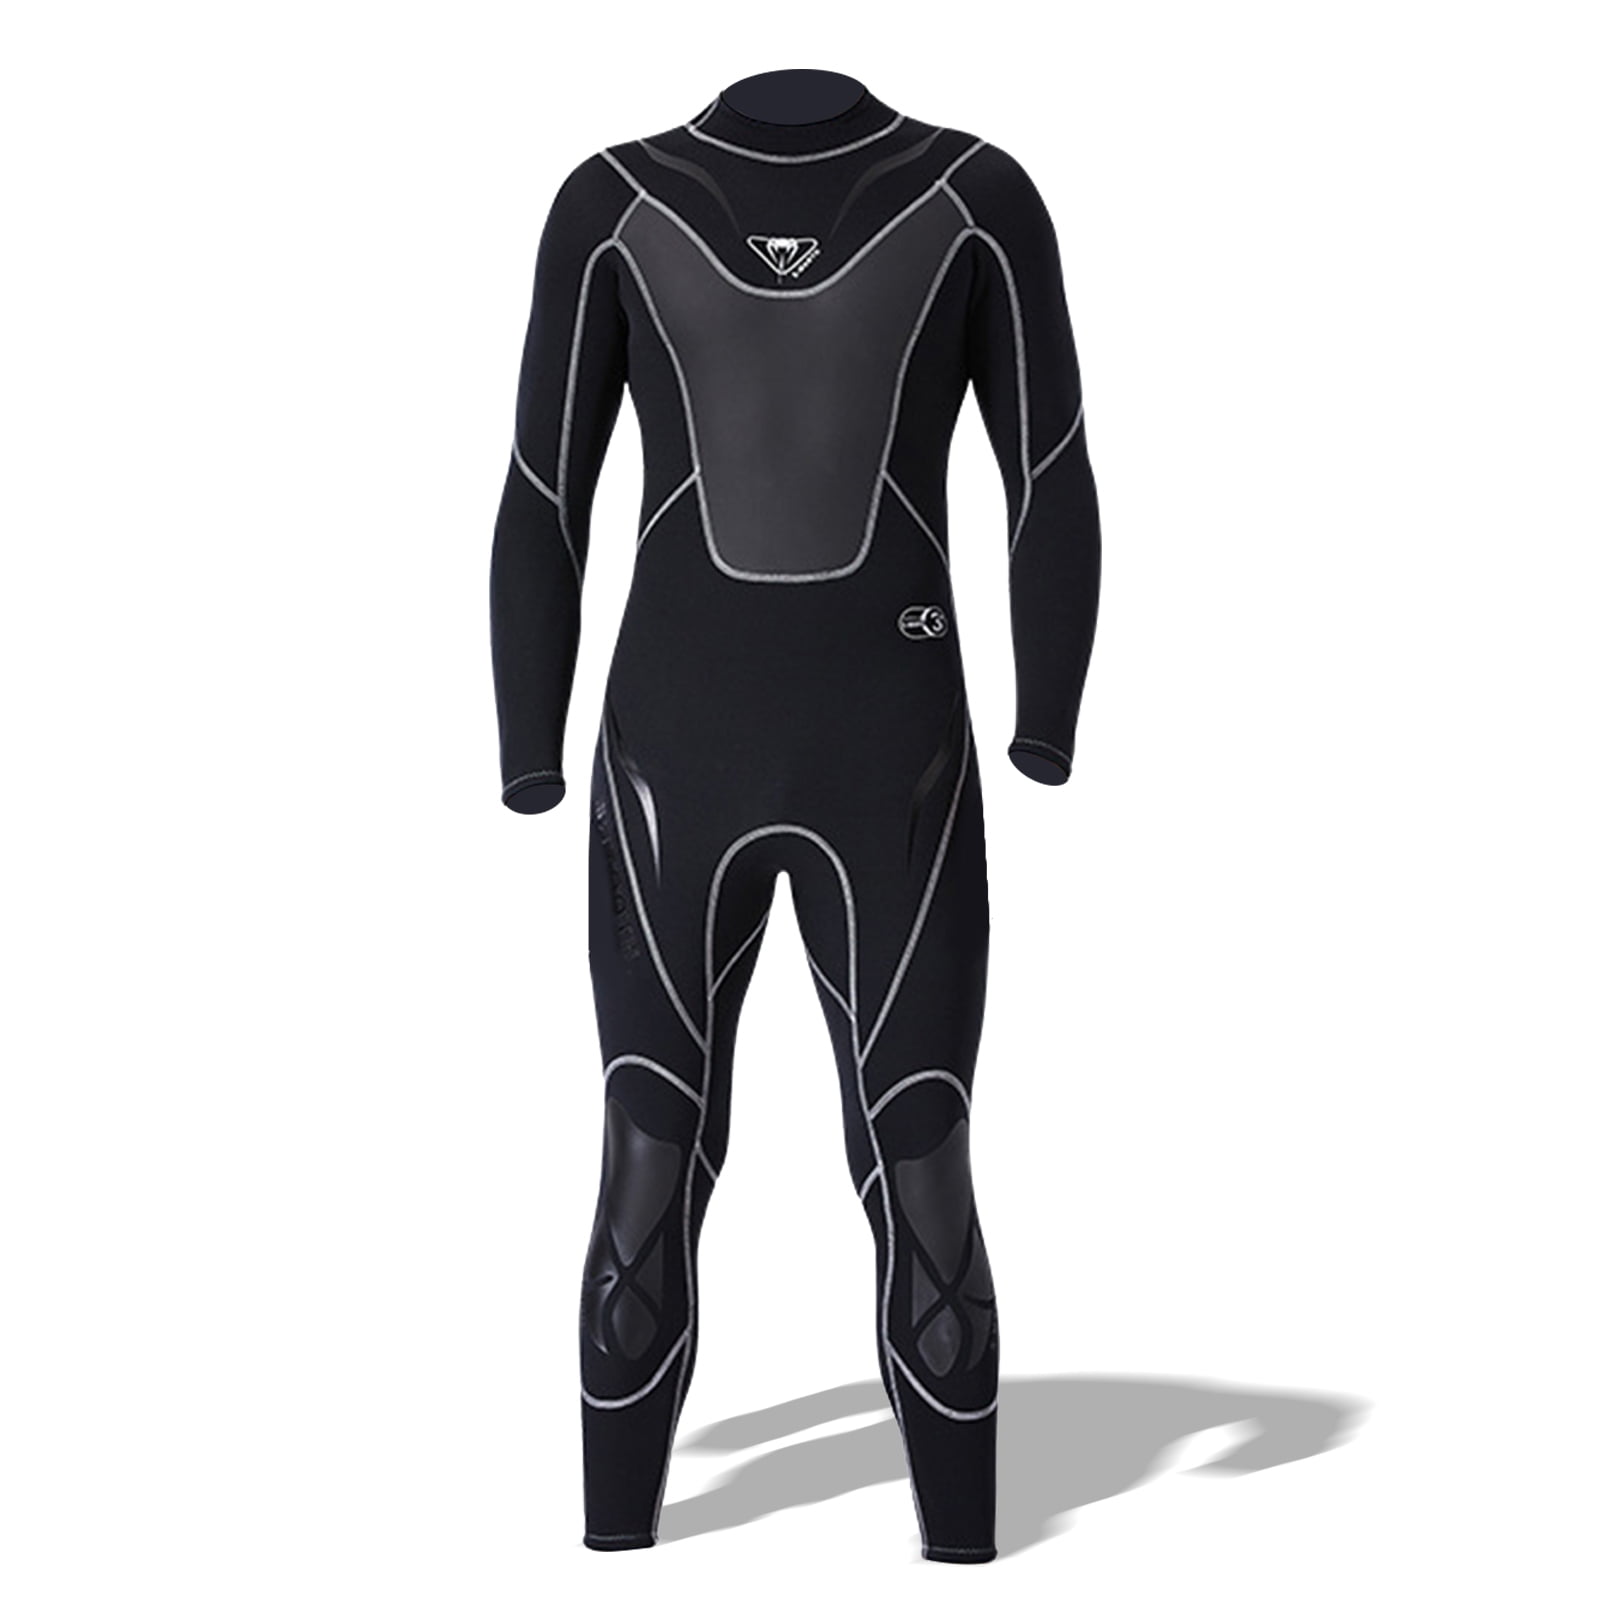 Details about   Men's 3mm Neoprene Wetsuit One Piece Body Diving Suit 